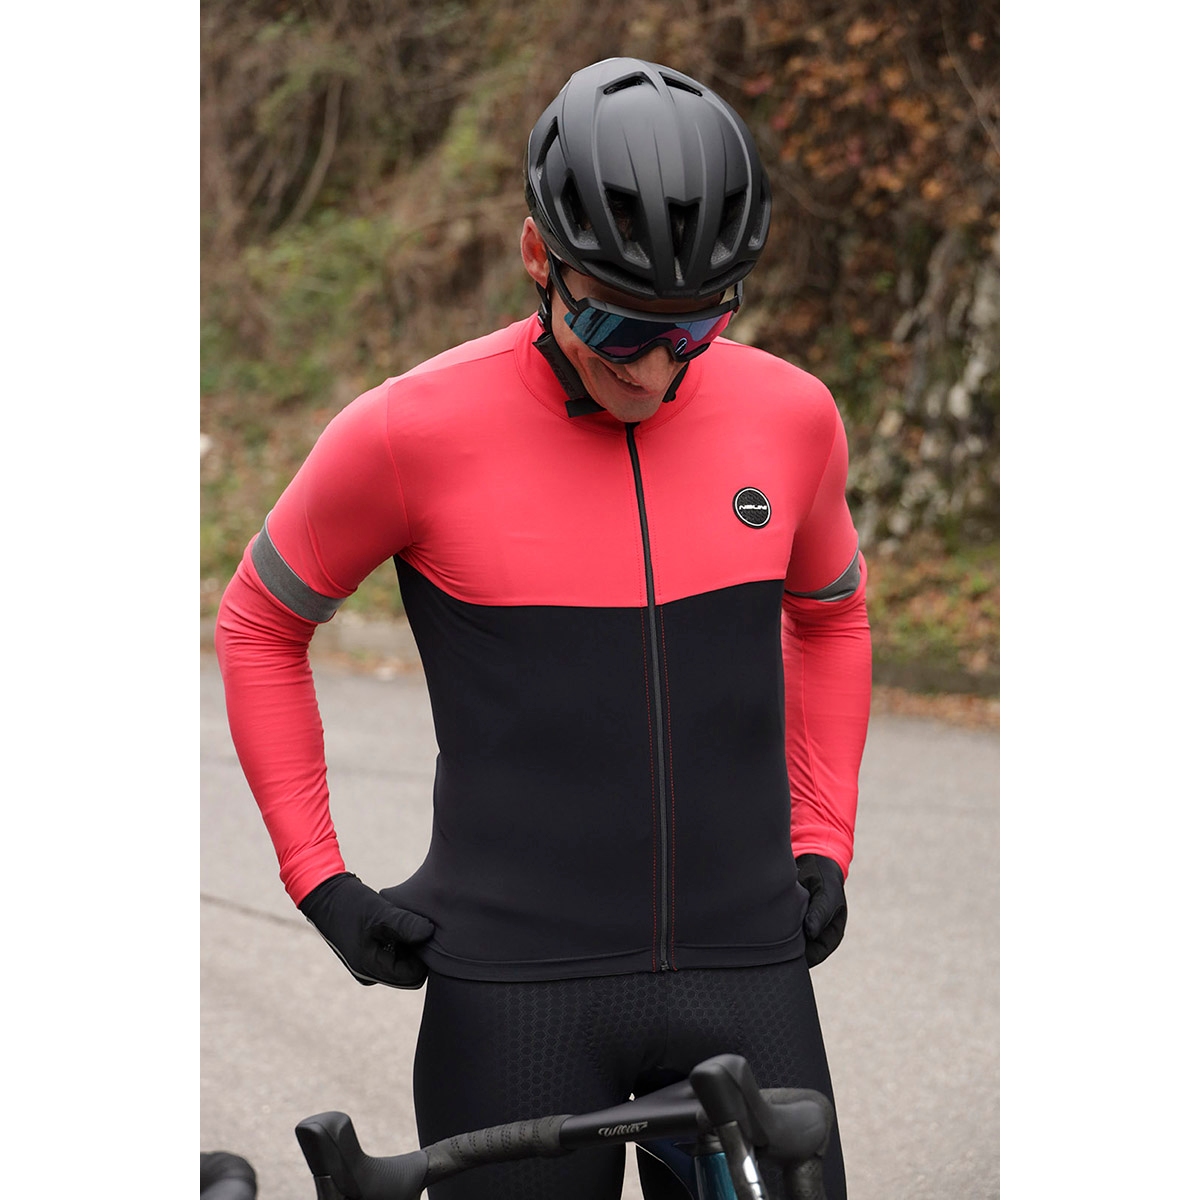 https://images.bike24.com/i/mb/b4/28/ed/nalini-warm-wrap-jersey-red-black-4100--5-1558497.jpg